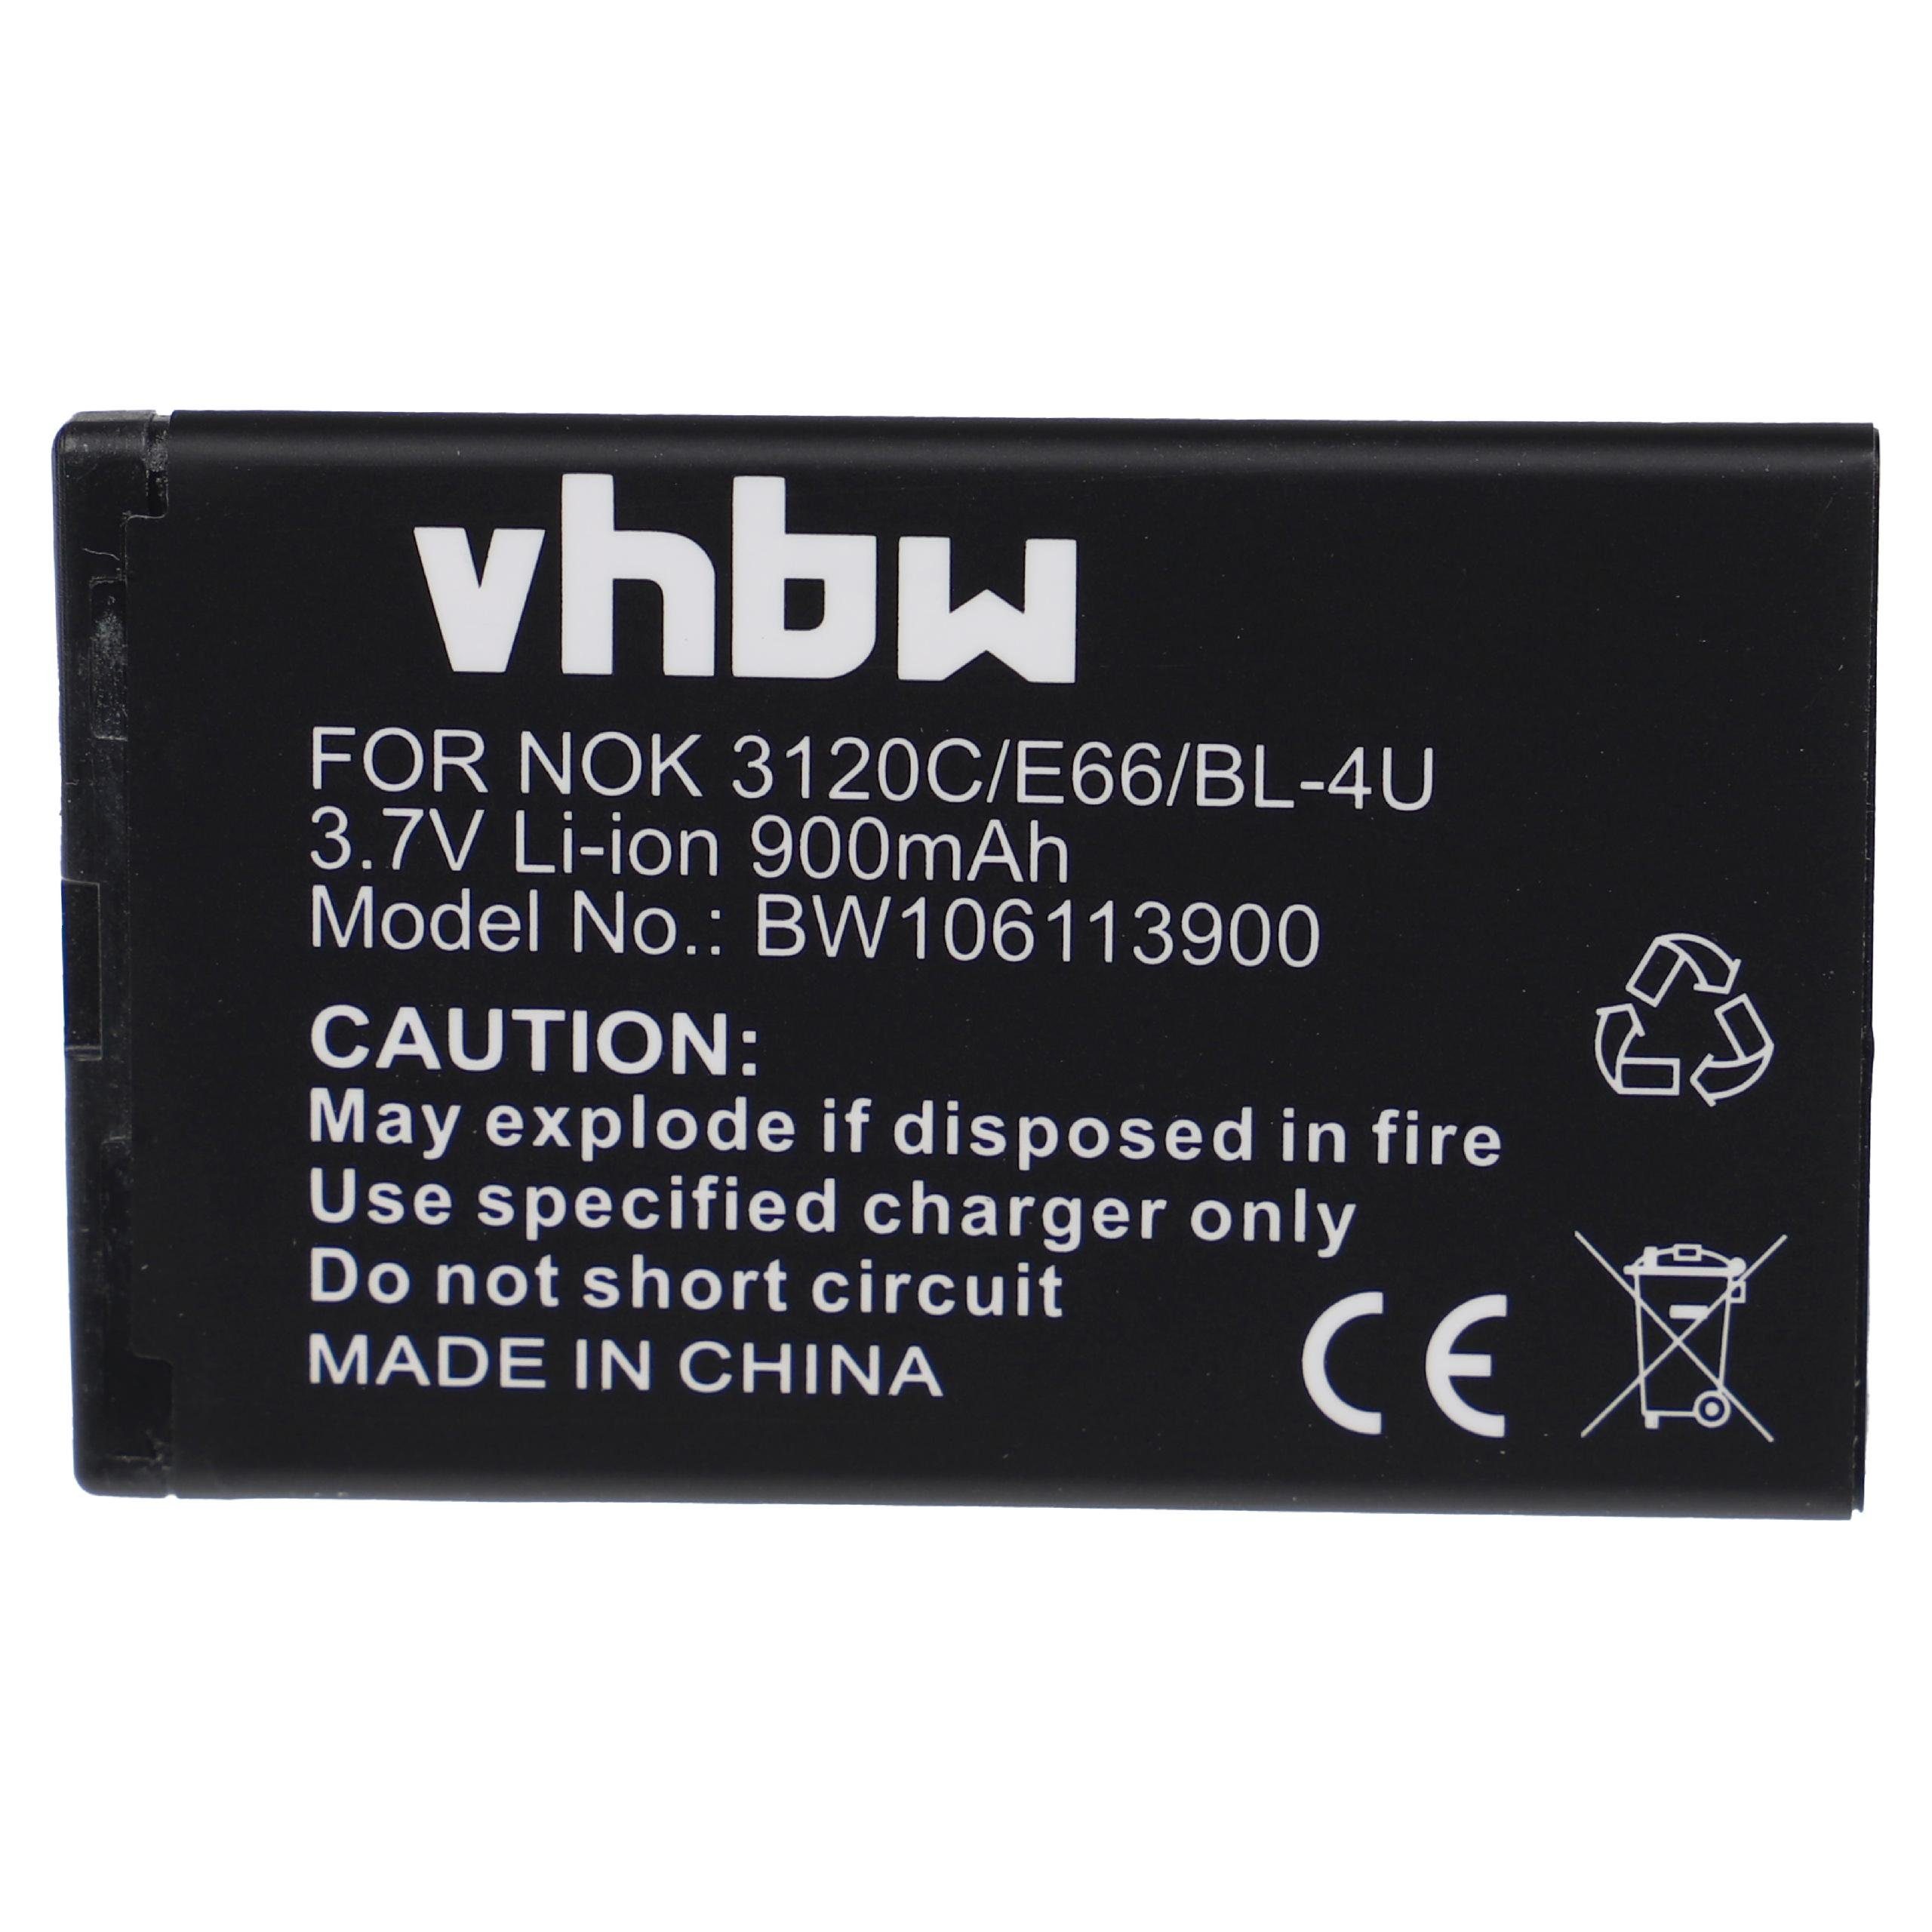 vhbw kompatibel mit Nokia Asha 300, 311, 305 Smartphone-Akku Li-Ion 900 mAh (3,7 V)